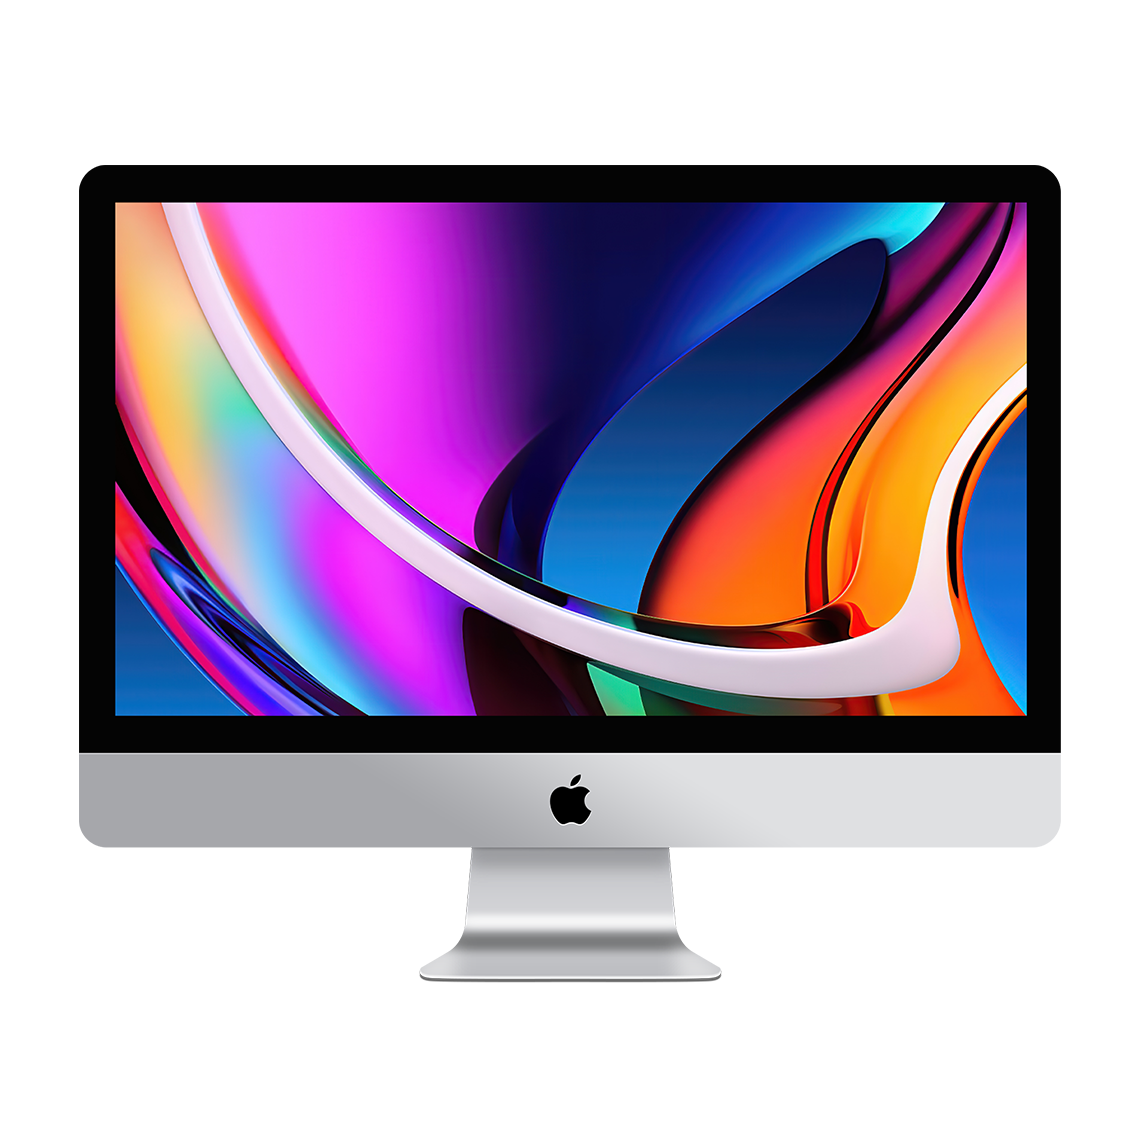 2020 iMac 27-inch 5K - Intel Core i5, 16GB, 1TB Flash, Radeon Pro 5300 4GB, Grade A